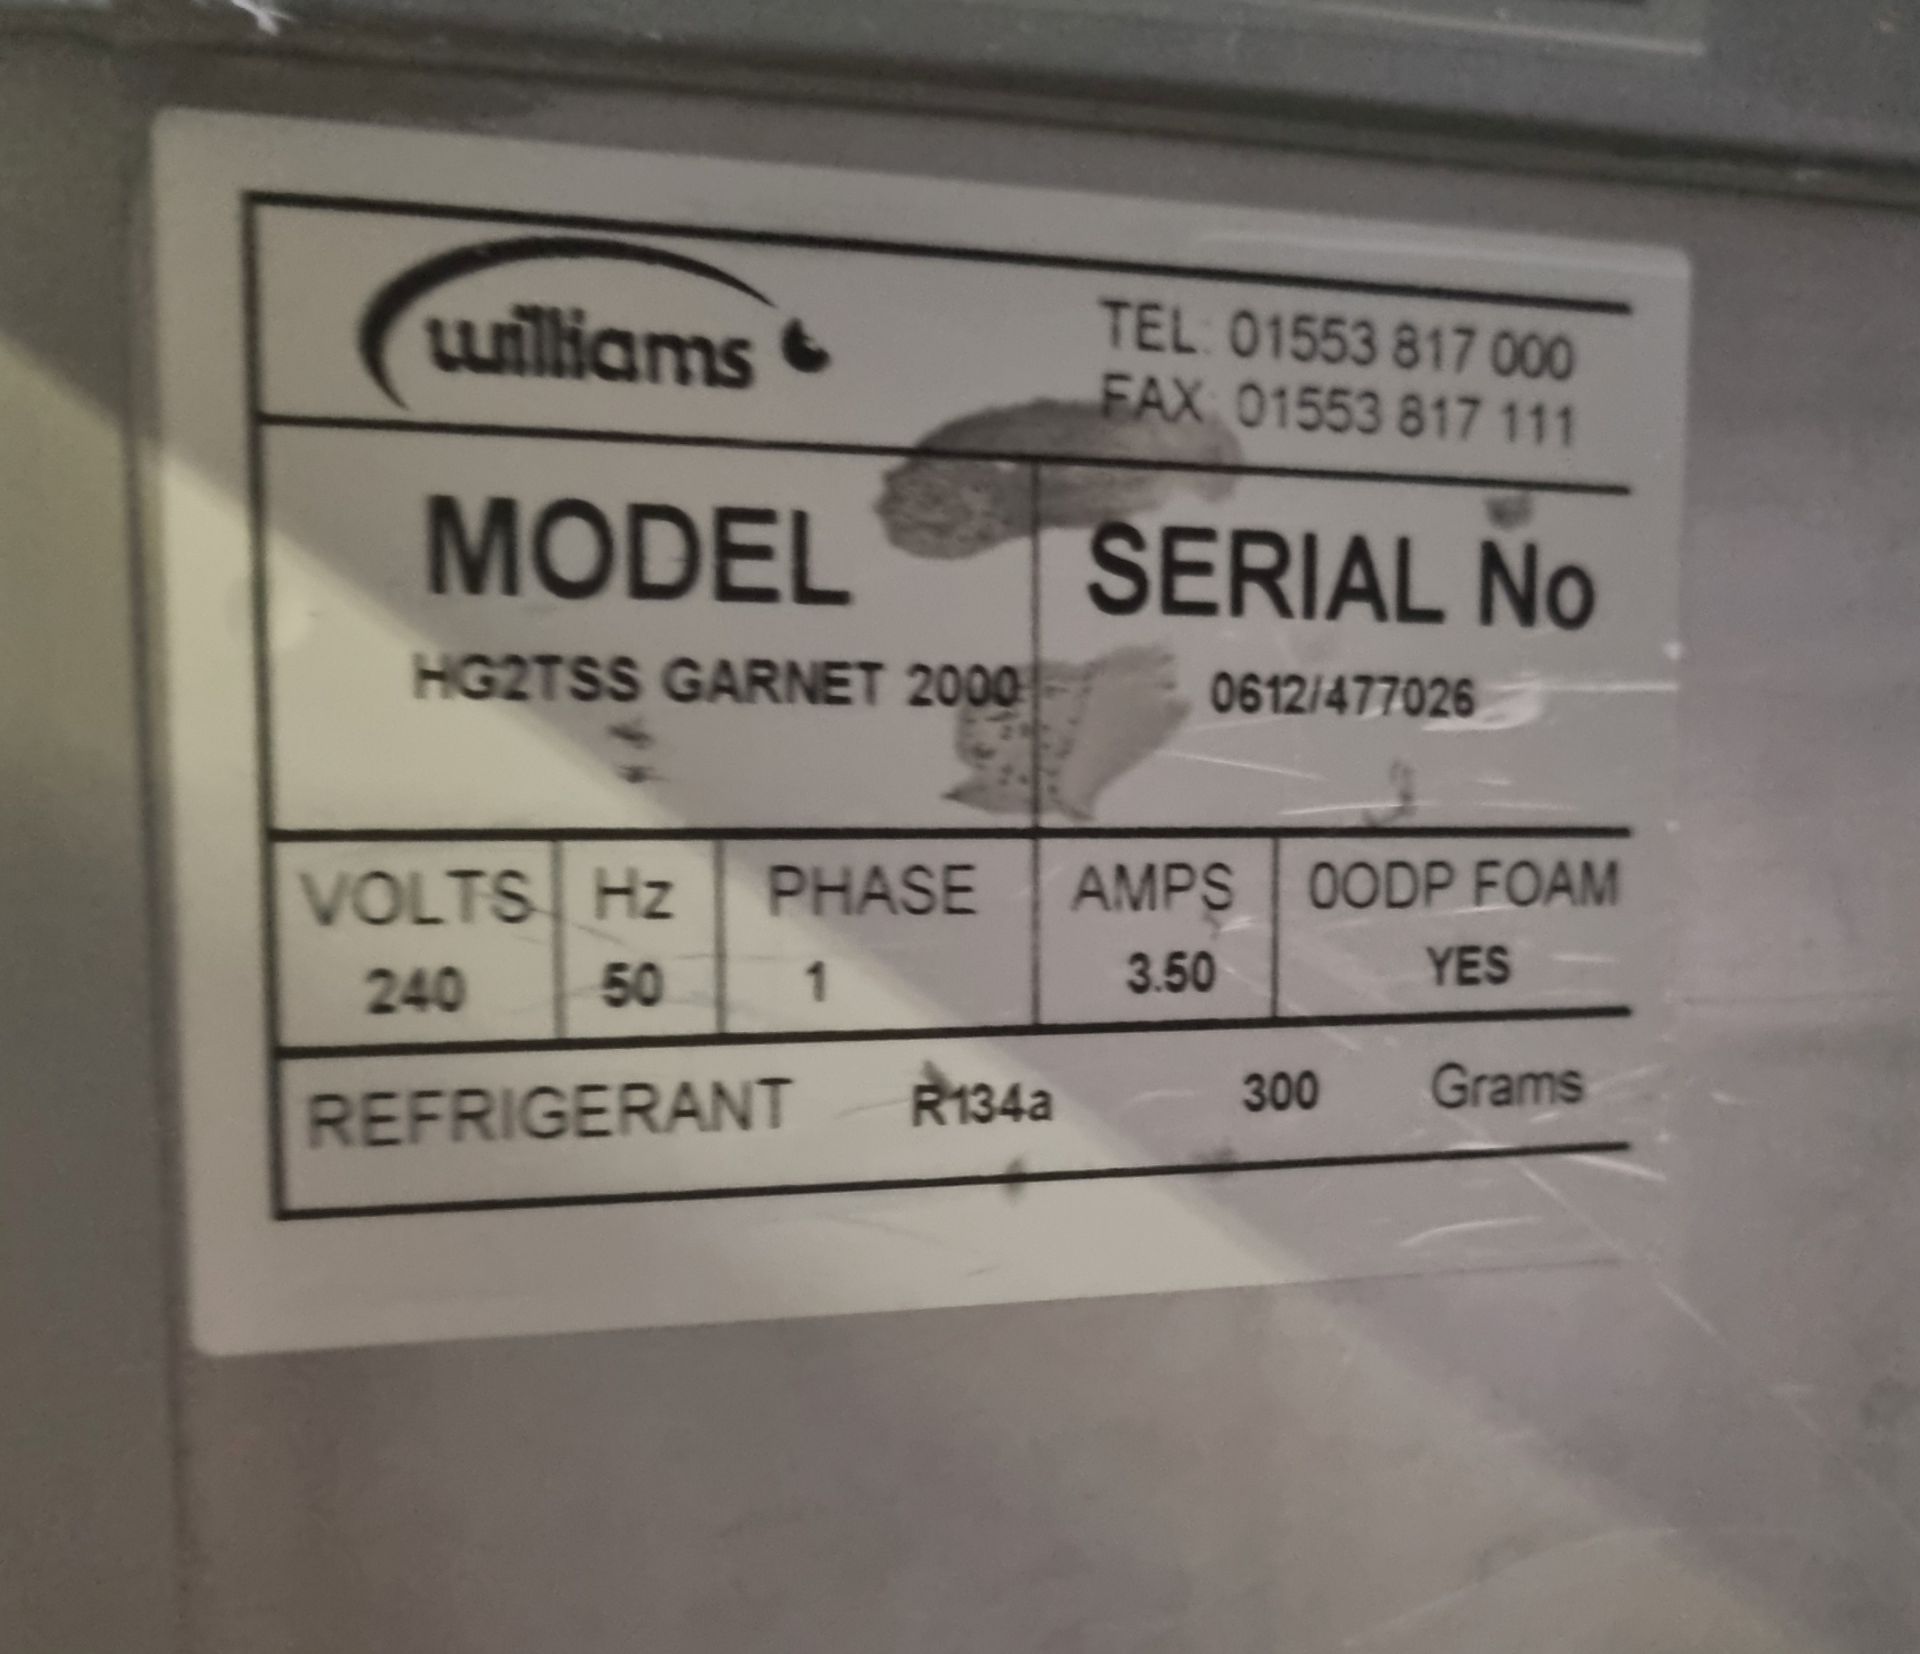 Williams HG2TSS Garent 2000 stainless steel double door upright fridge - W 1400 x D 830 x H 1970mm - Bild 4 aus 6